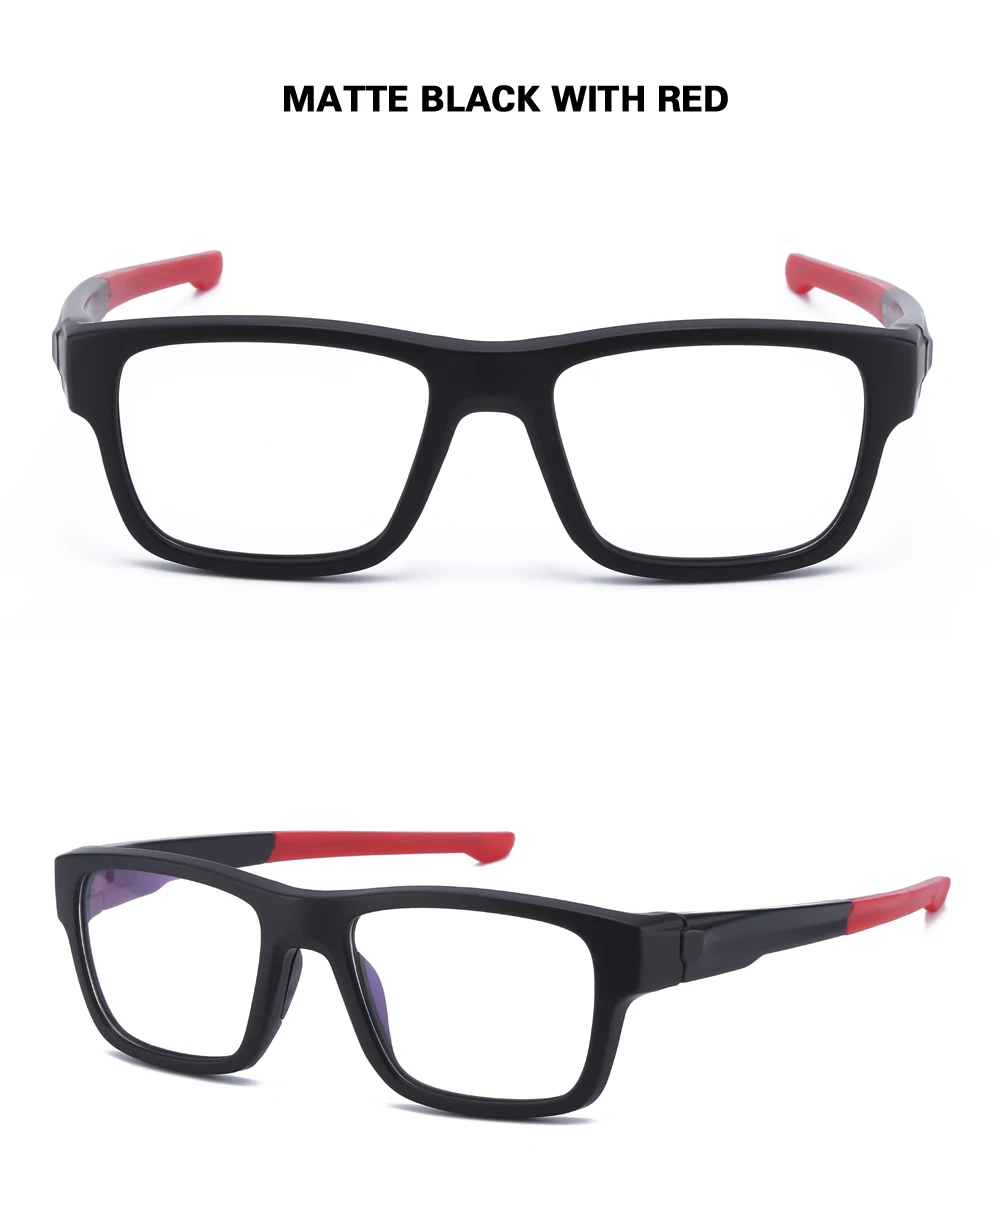 TR90 спортивные очки, гибкие очки для мужчин, оптические очки, оправа, очки для женщин Occhiali Da Vista Uomo